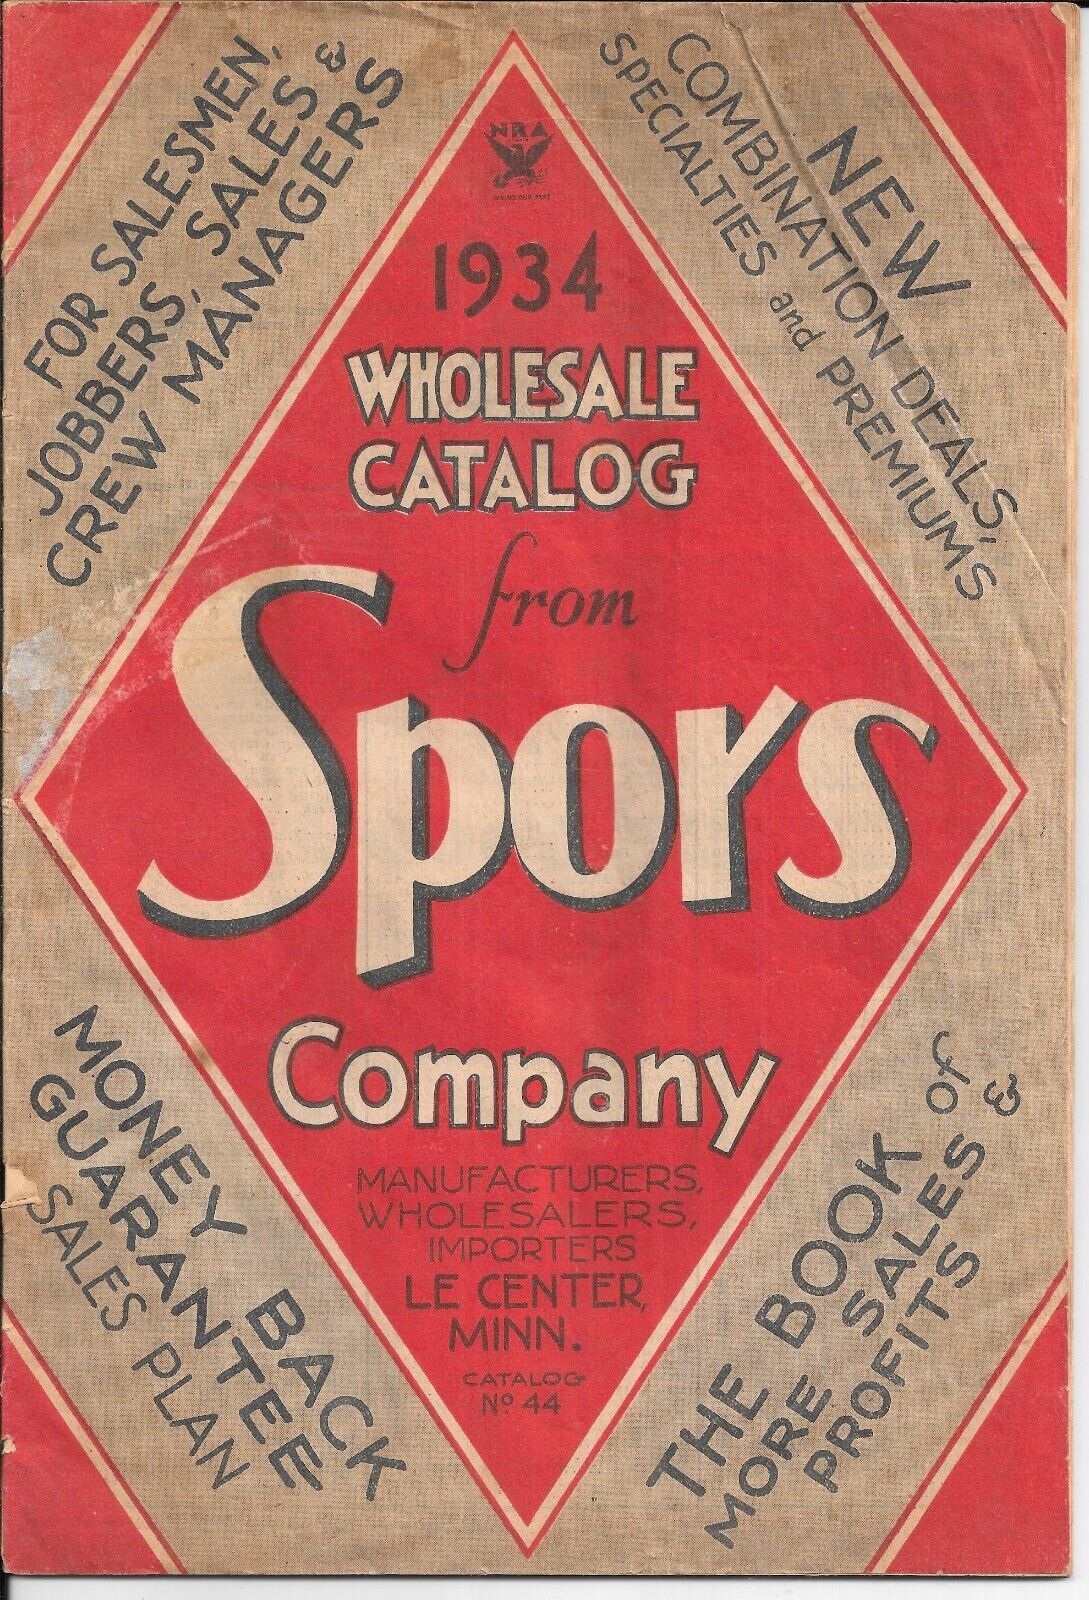 1934 Vintage Wholesale Catalog from SPORS COMPANY Le Center, Minnesota, MN